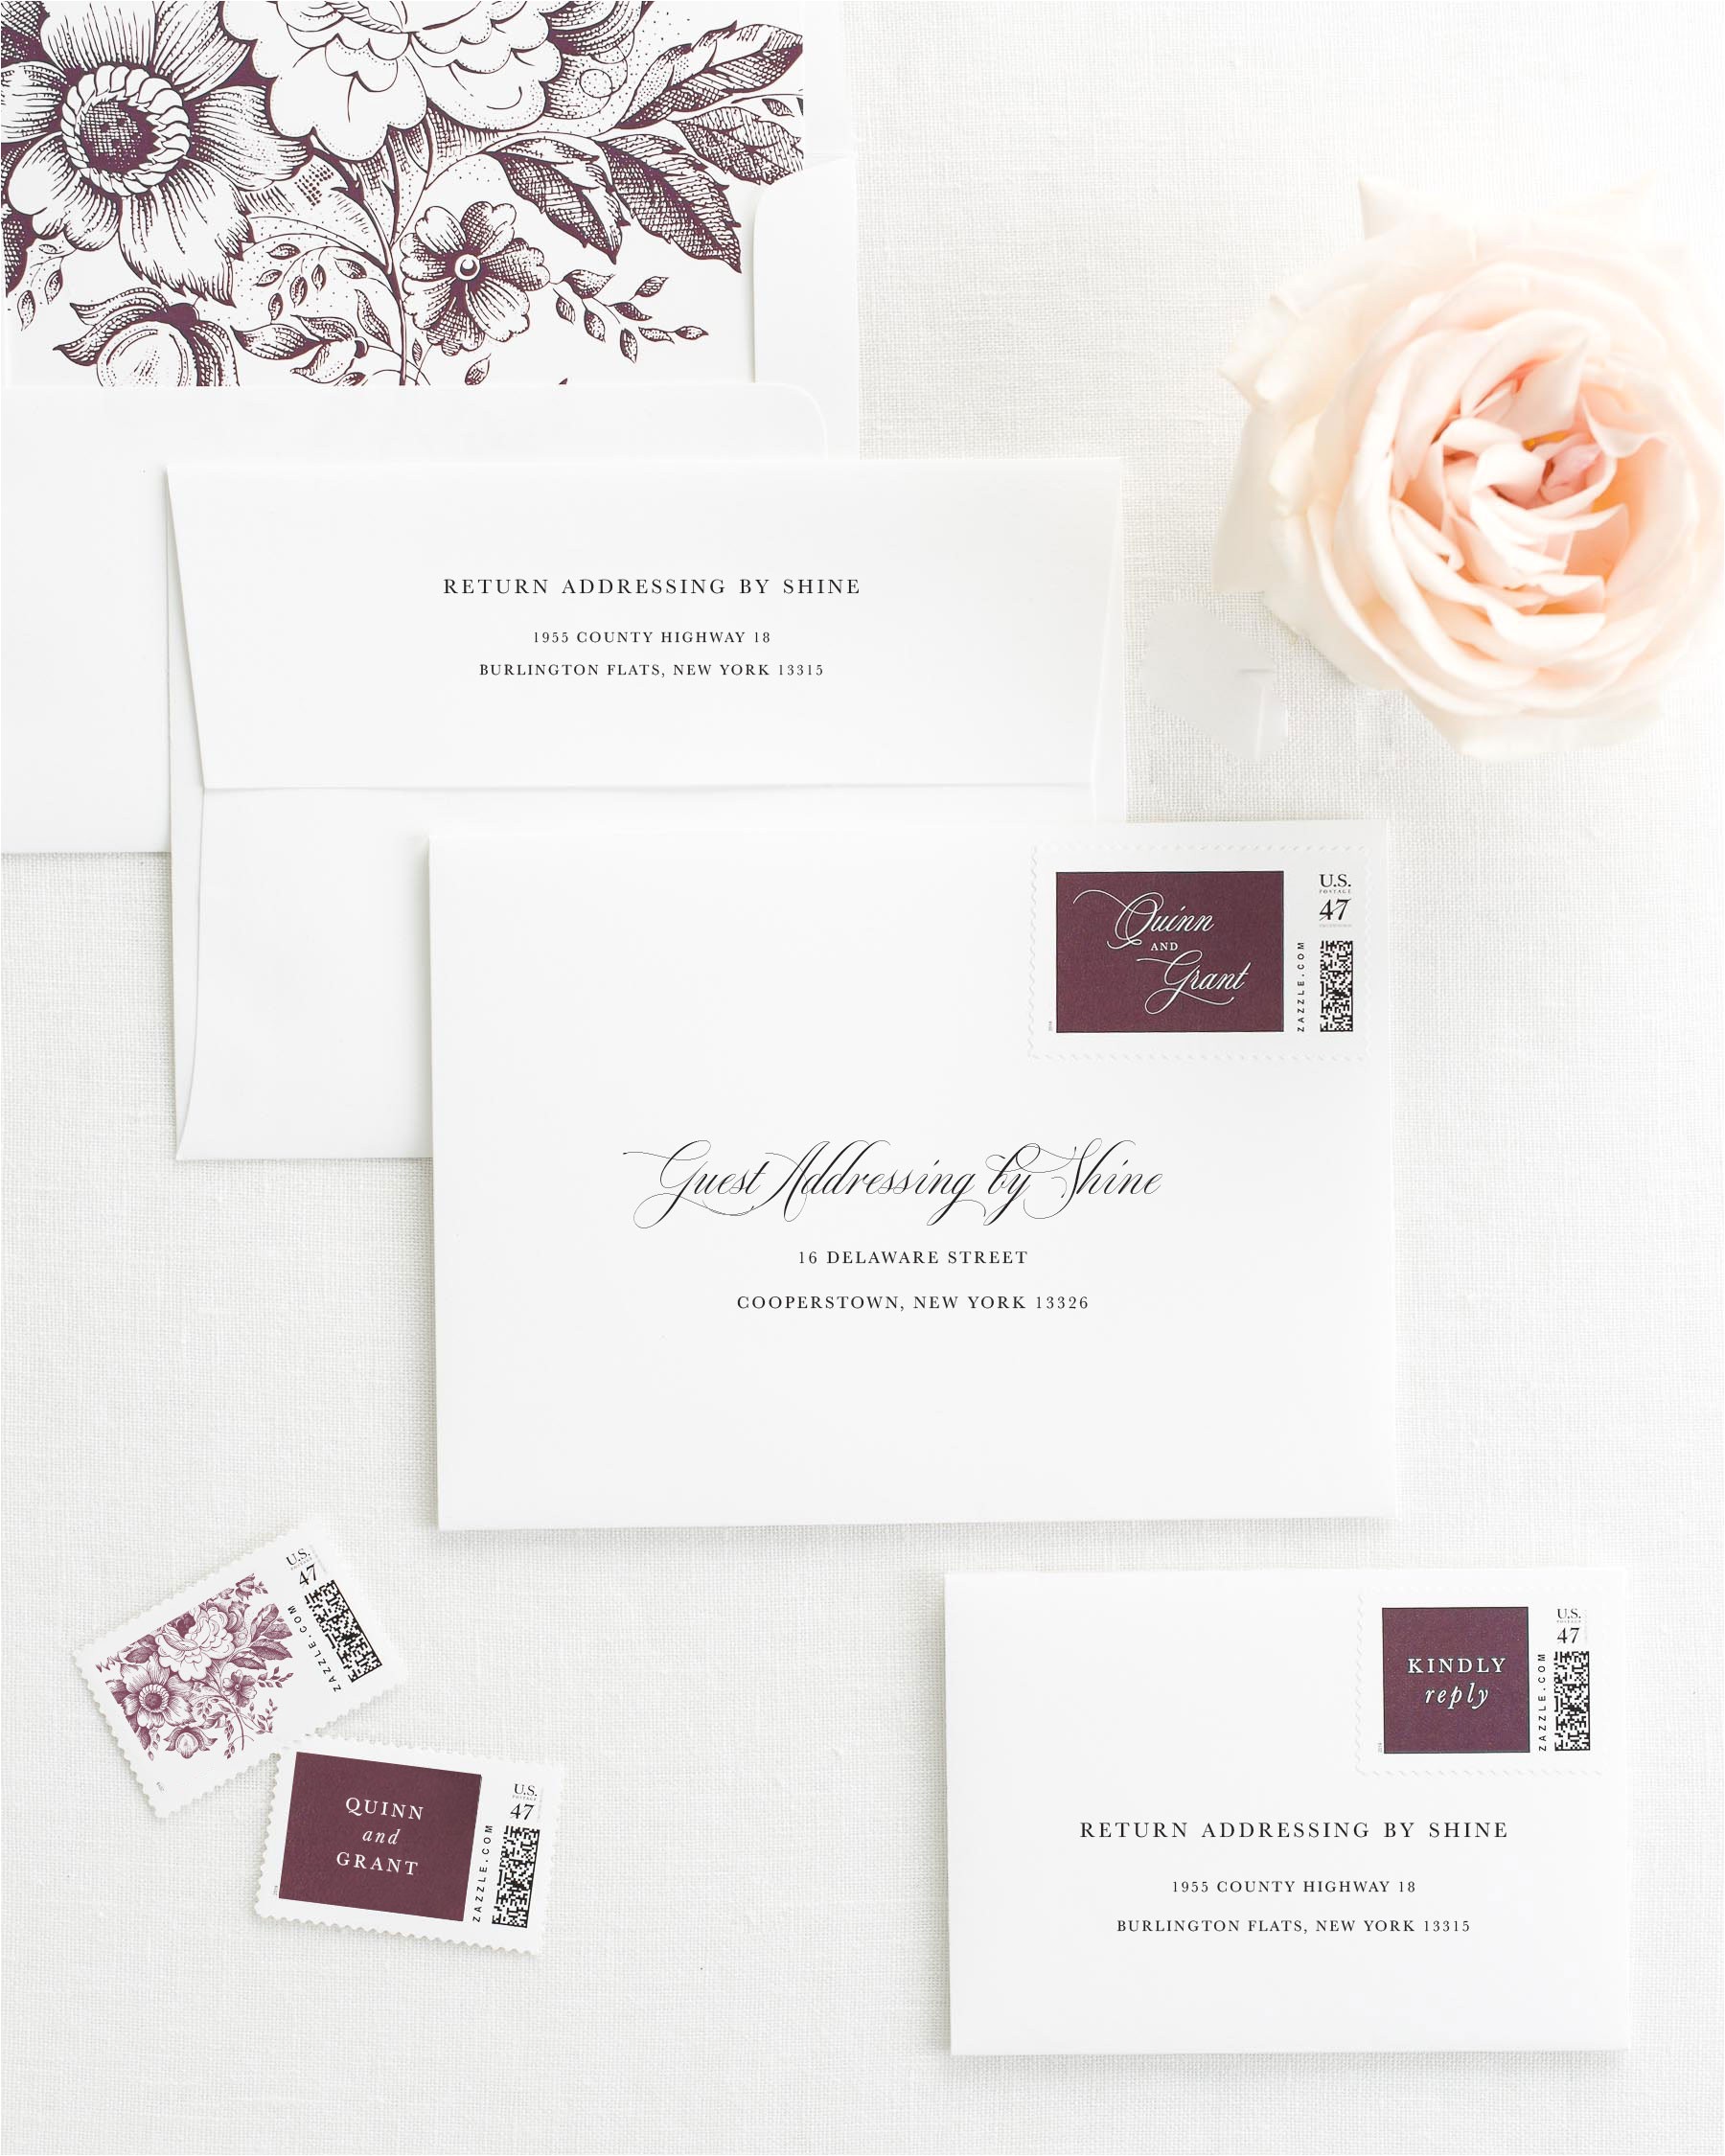 quinn ribbon wedding invitations ribbon wedding invitations by shi